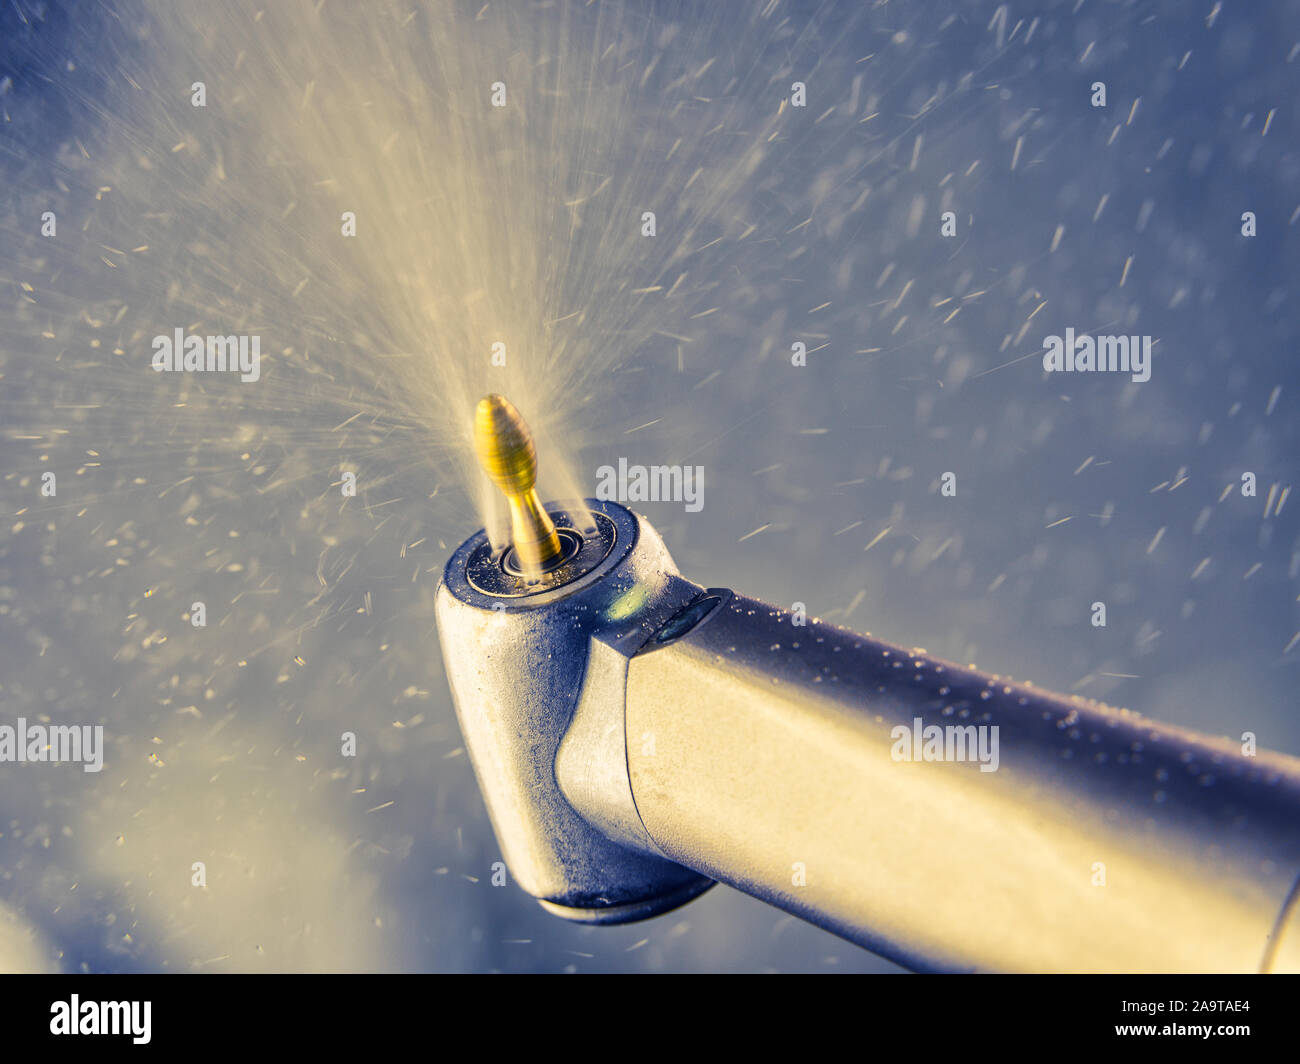 Dental drill water spray close up Stock Photo